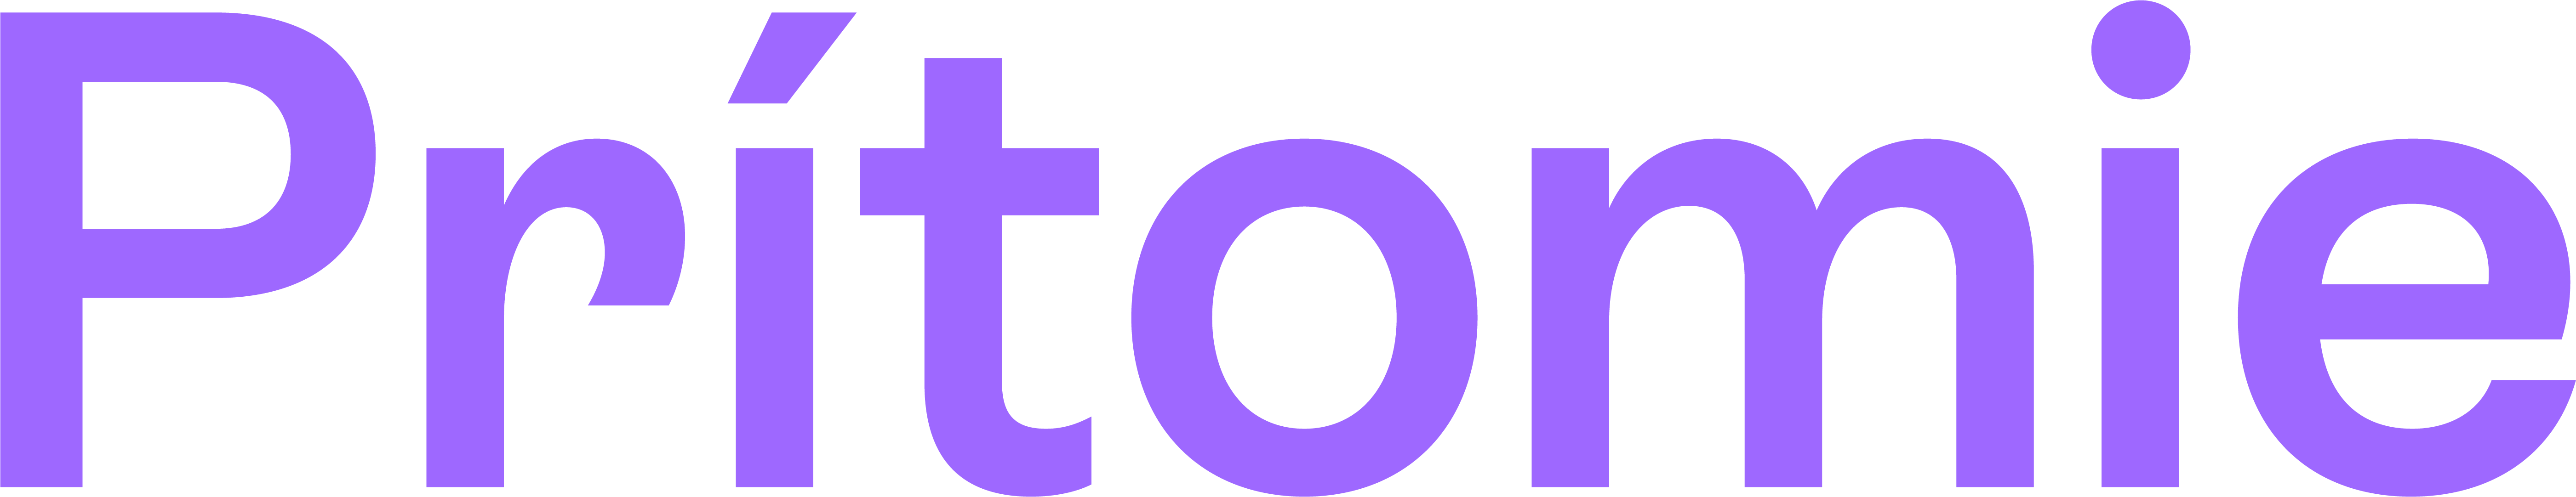 logo fialove